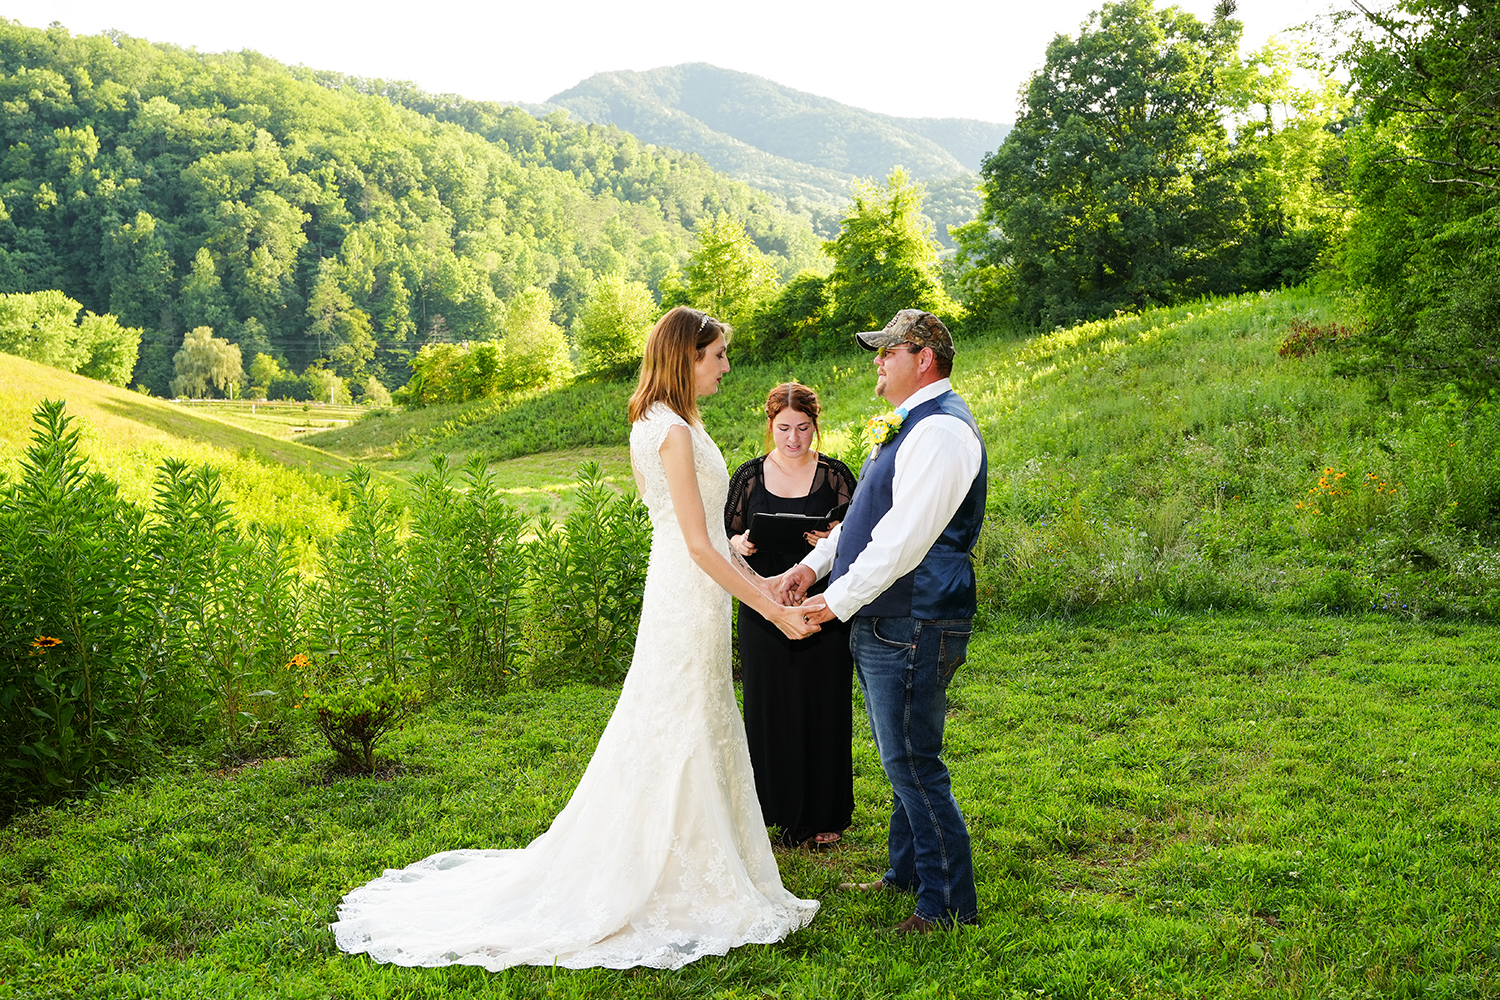 Mountain View wedding ceremony